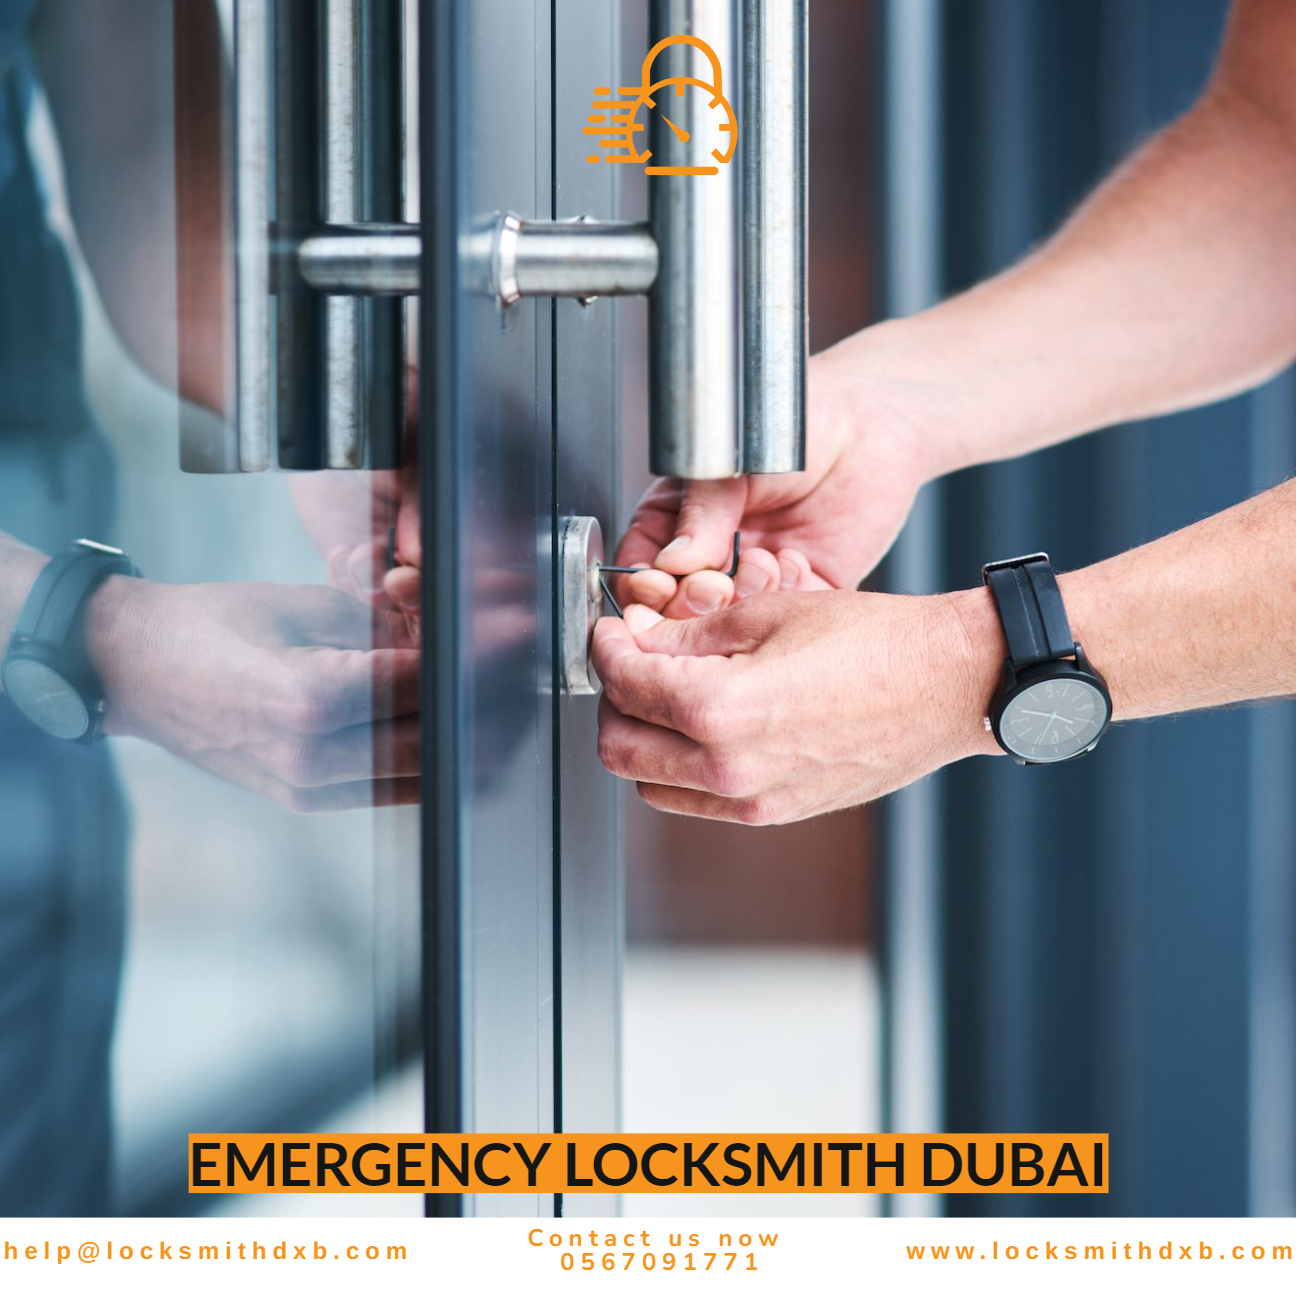 Emergency Locksmith Dubai